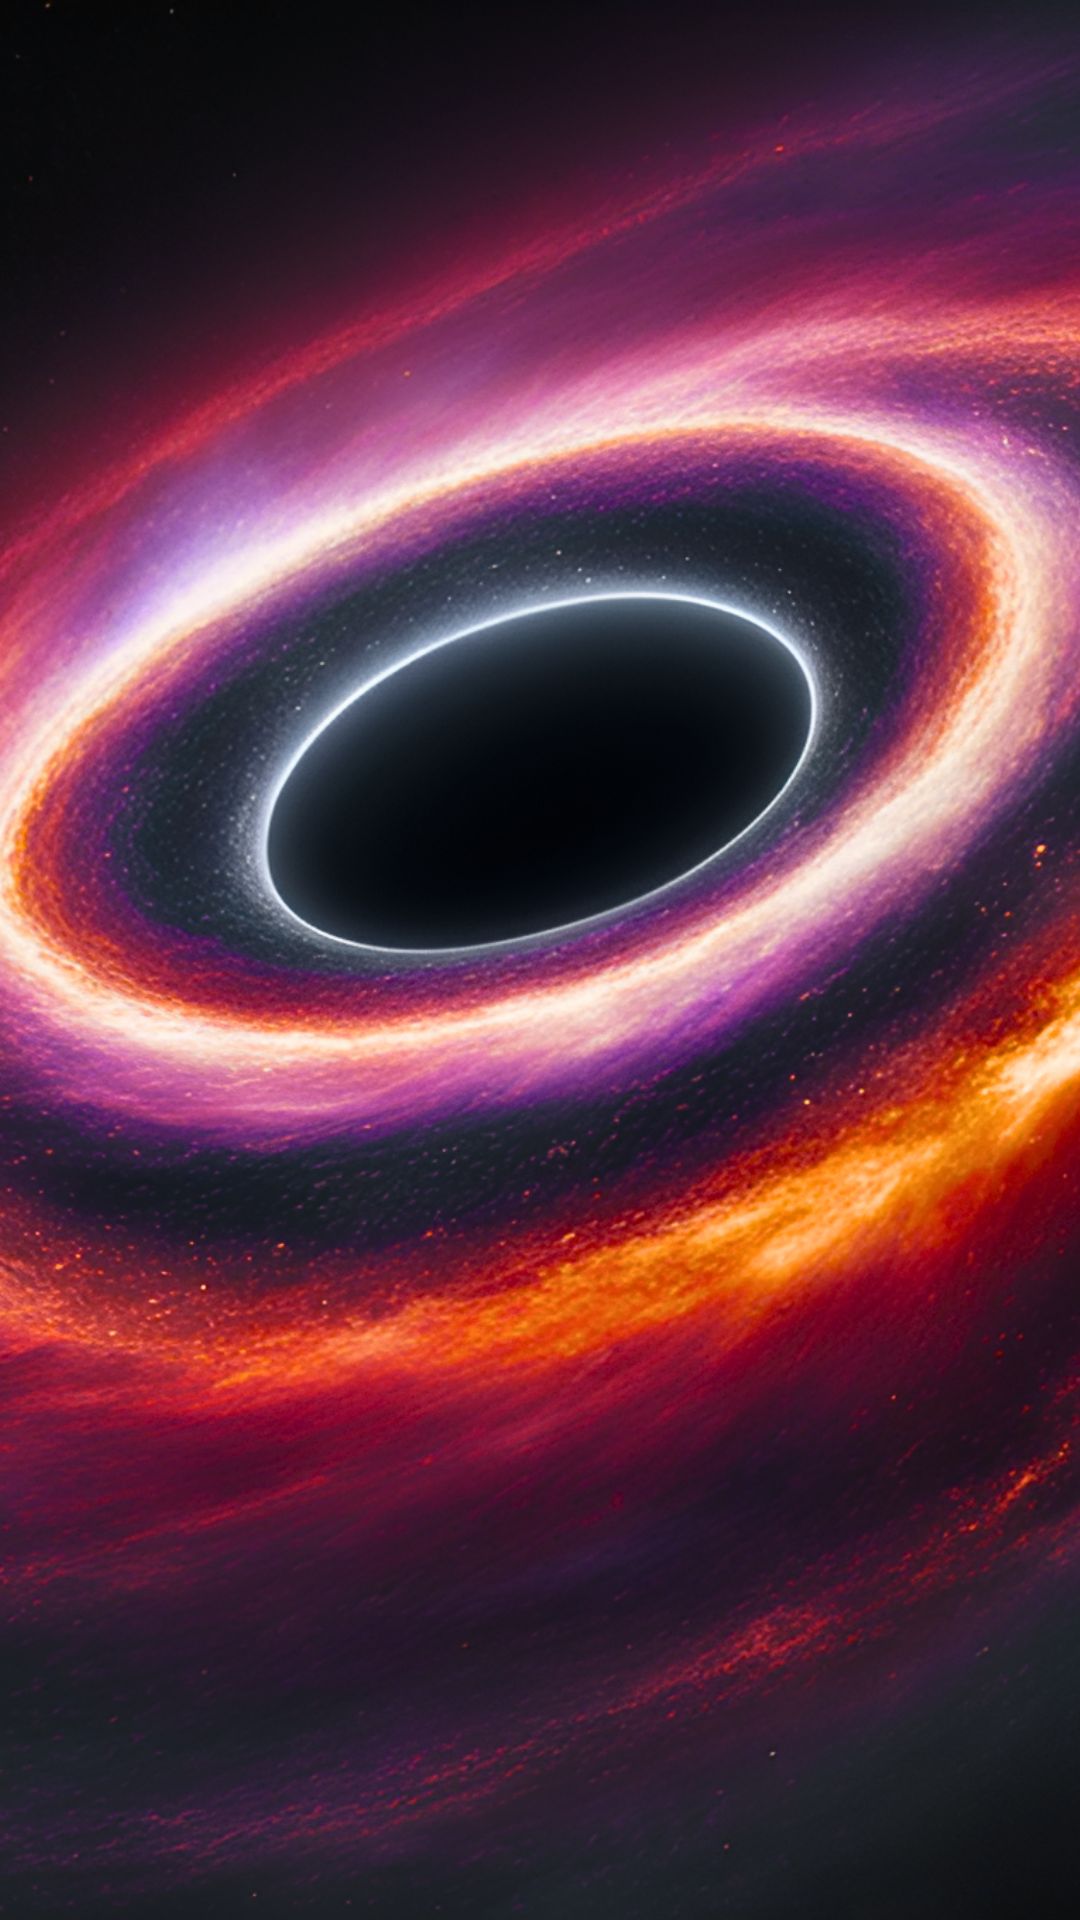 Black Hole Sun Image